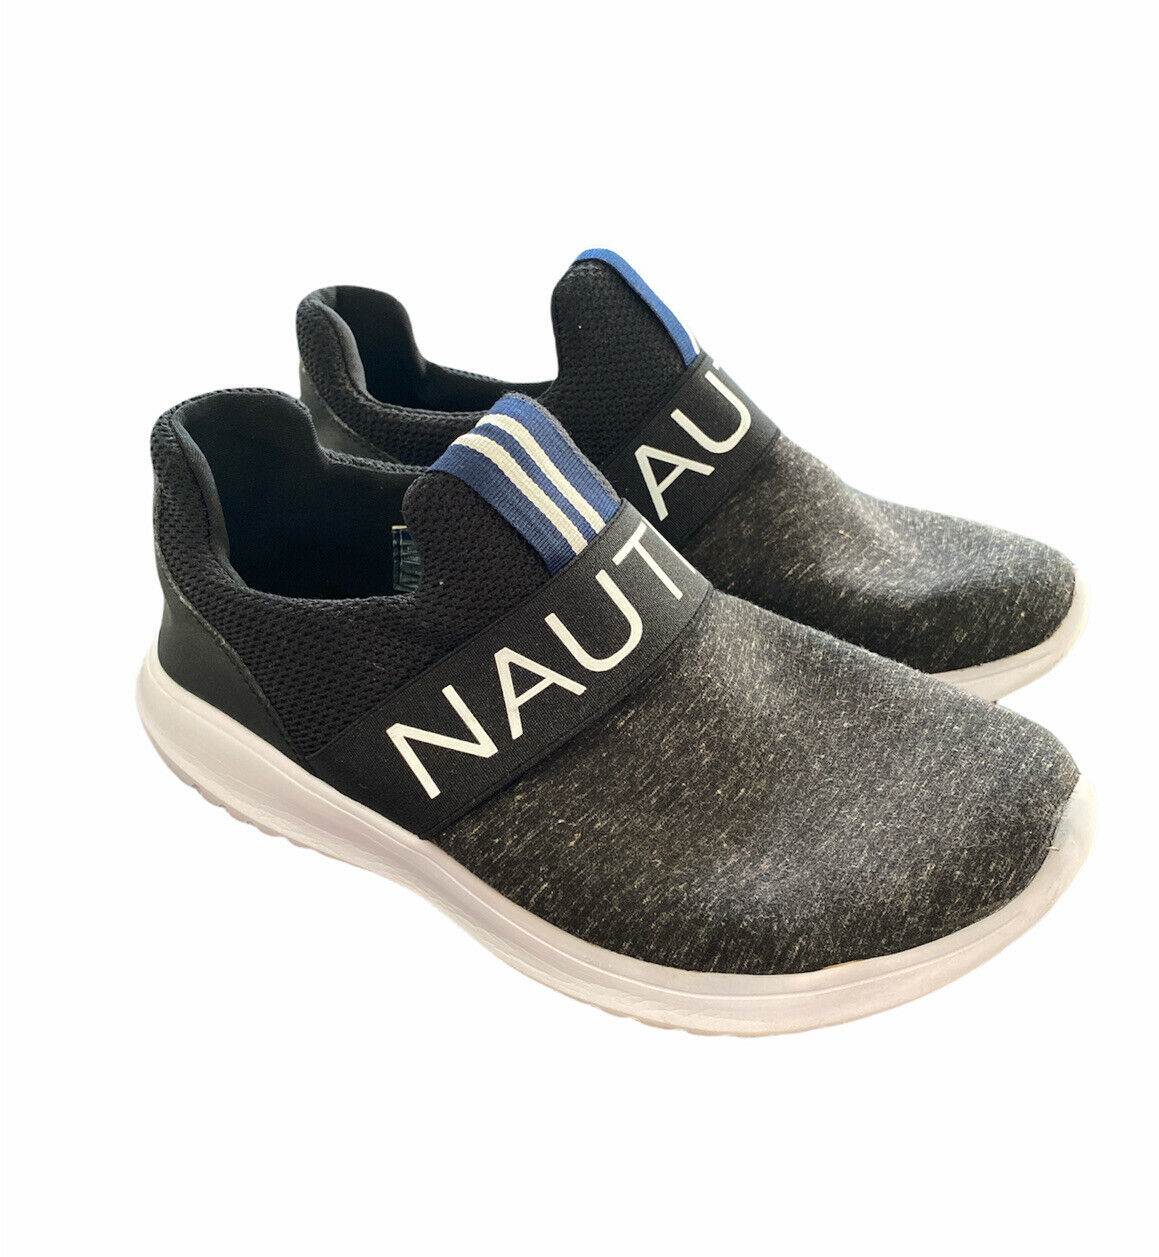 Nautica Women Fashion Slip-On Sneaker Jogger Comfort Running Shoes Size 9